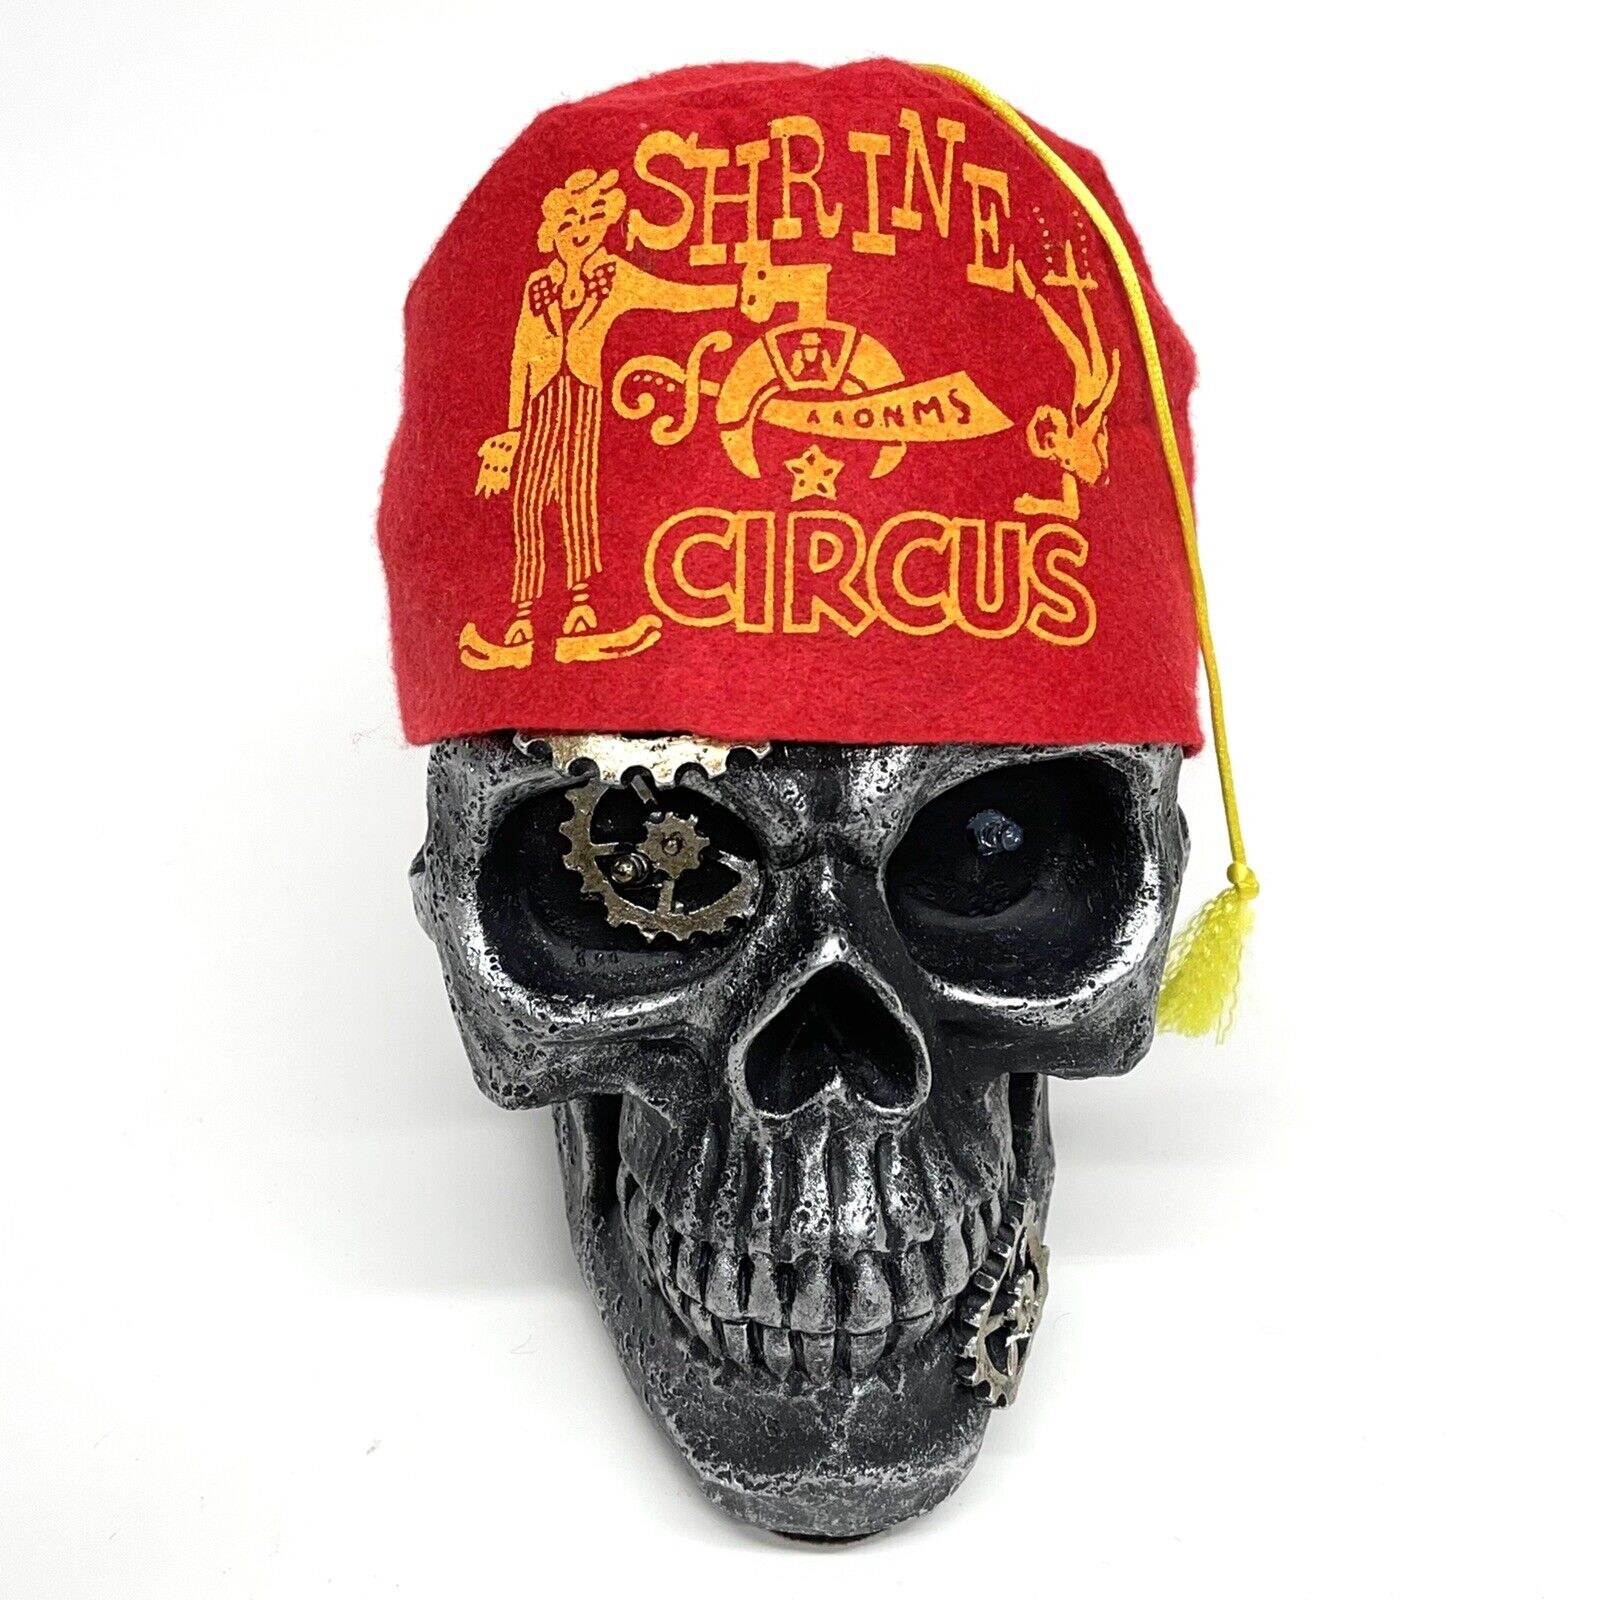 Vintage Shrine Circus Aaonms Novelty Souvenir Red Felt Fez Hat with Gold Tassle